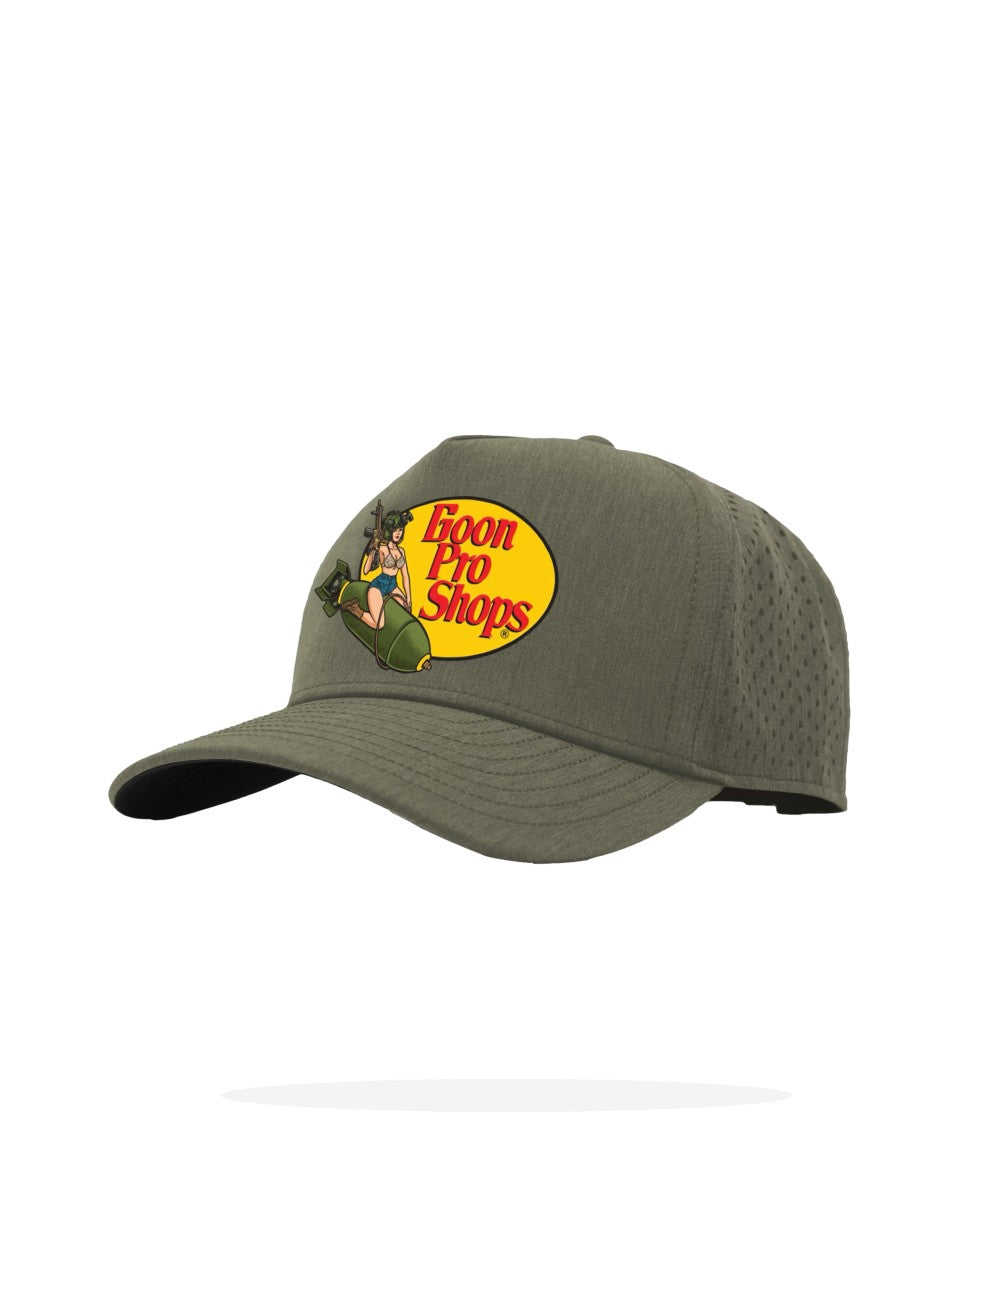 Goon Pro Shops Hat